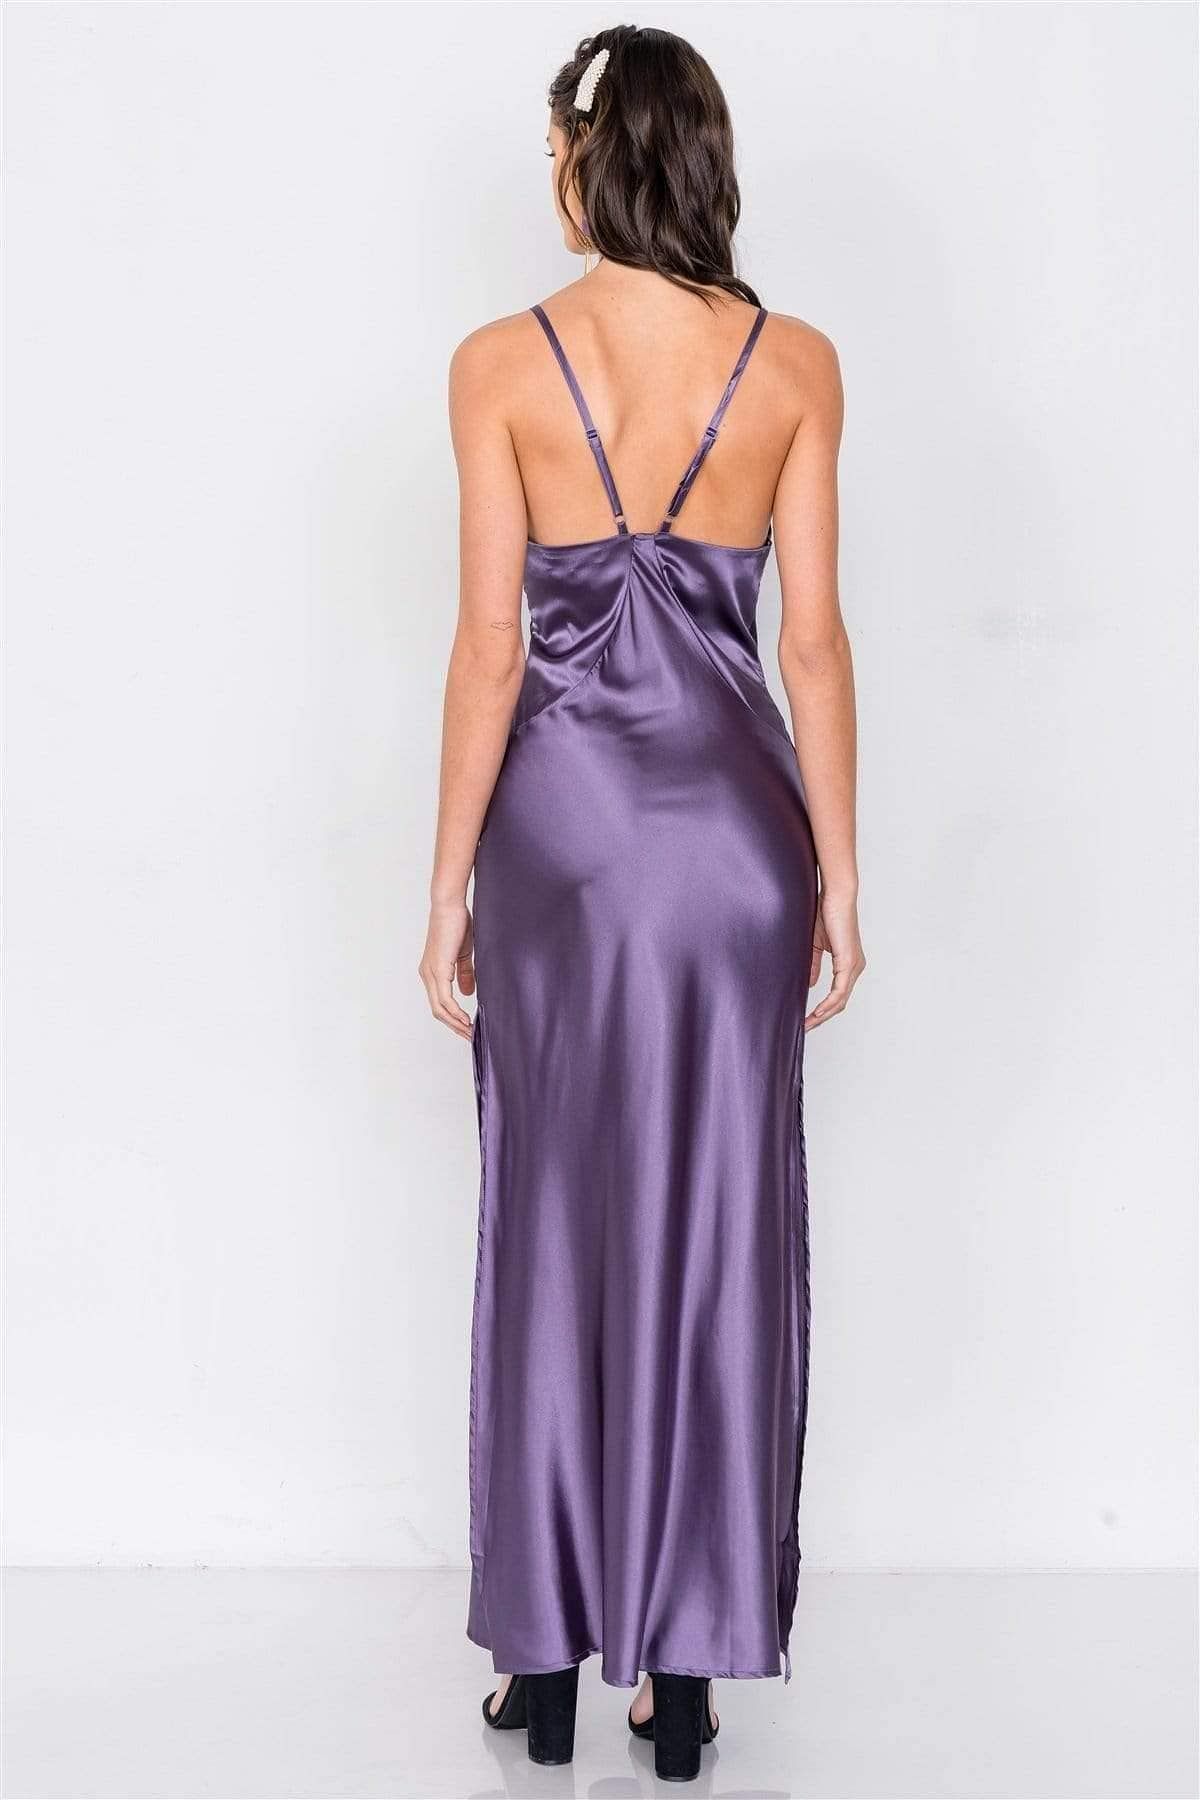 Eggplant V-Neck Satin Maxi Dress - Shopping Therapy dress